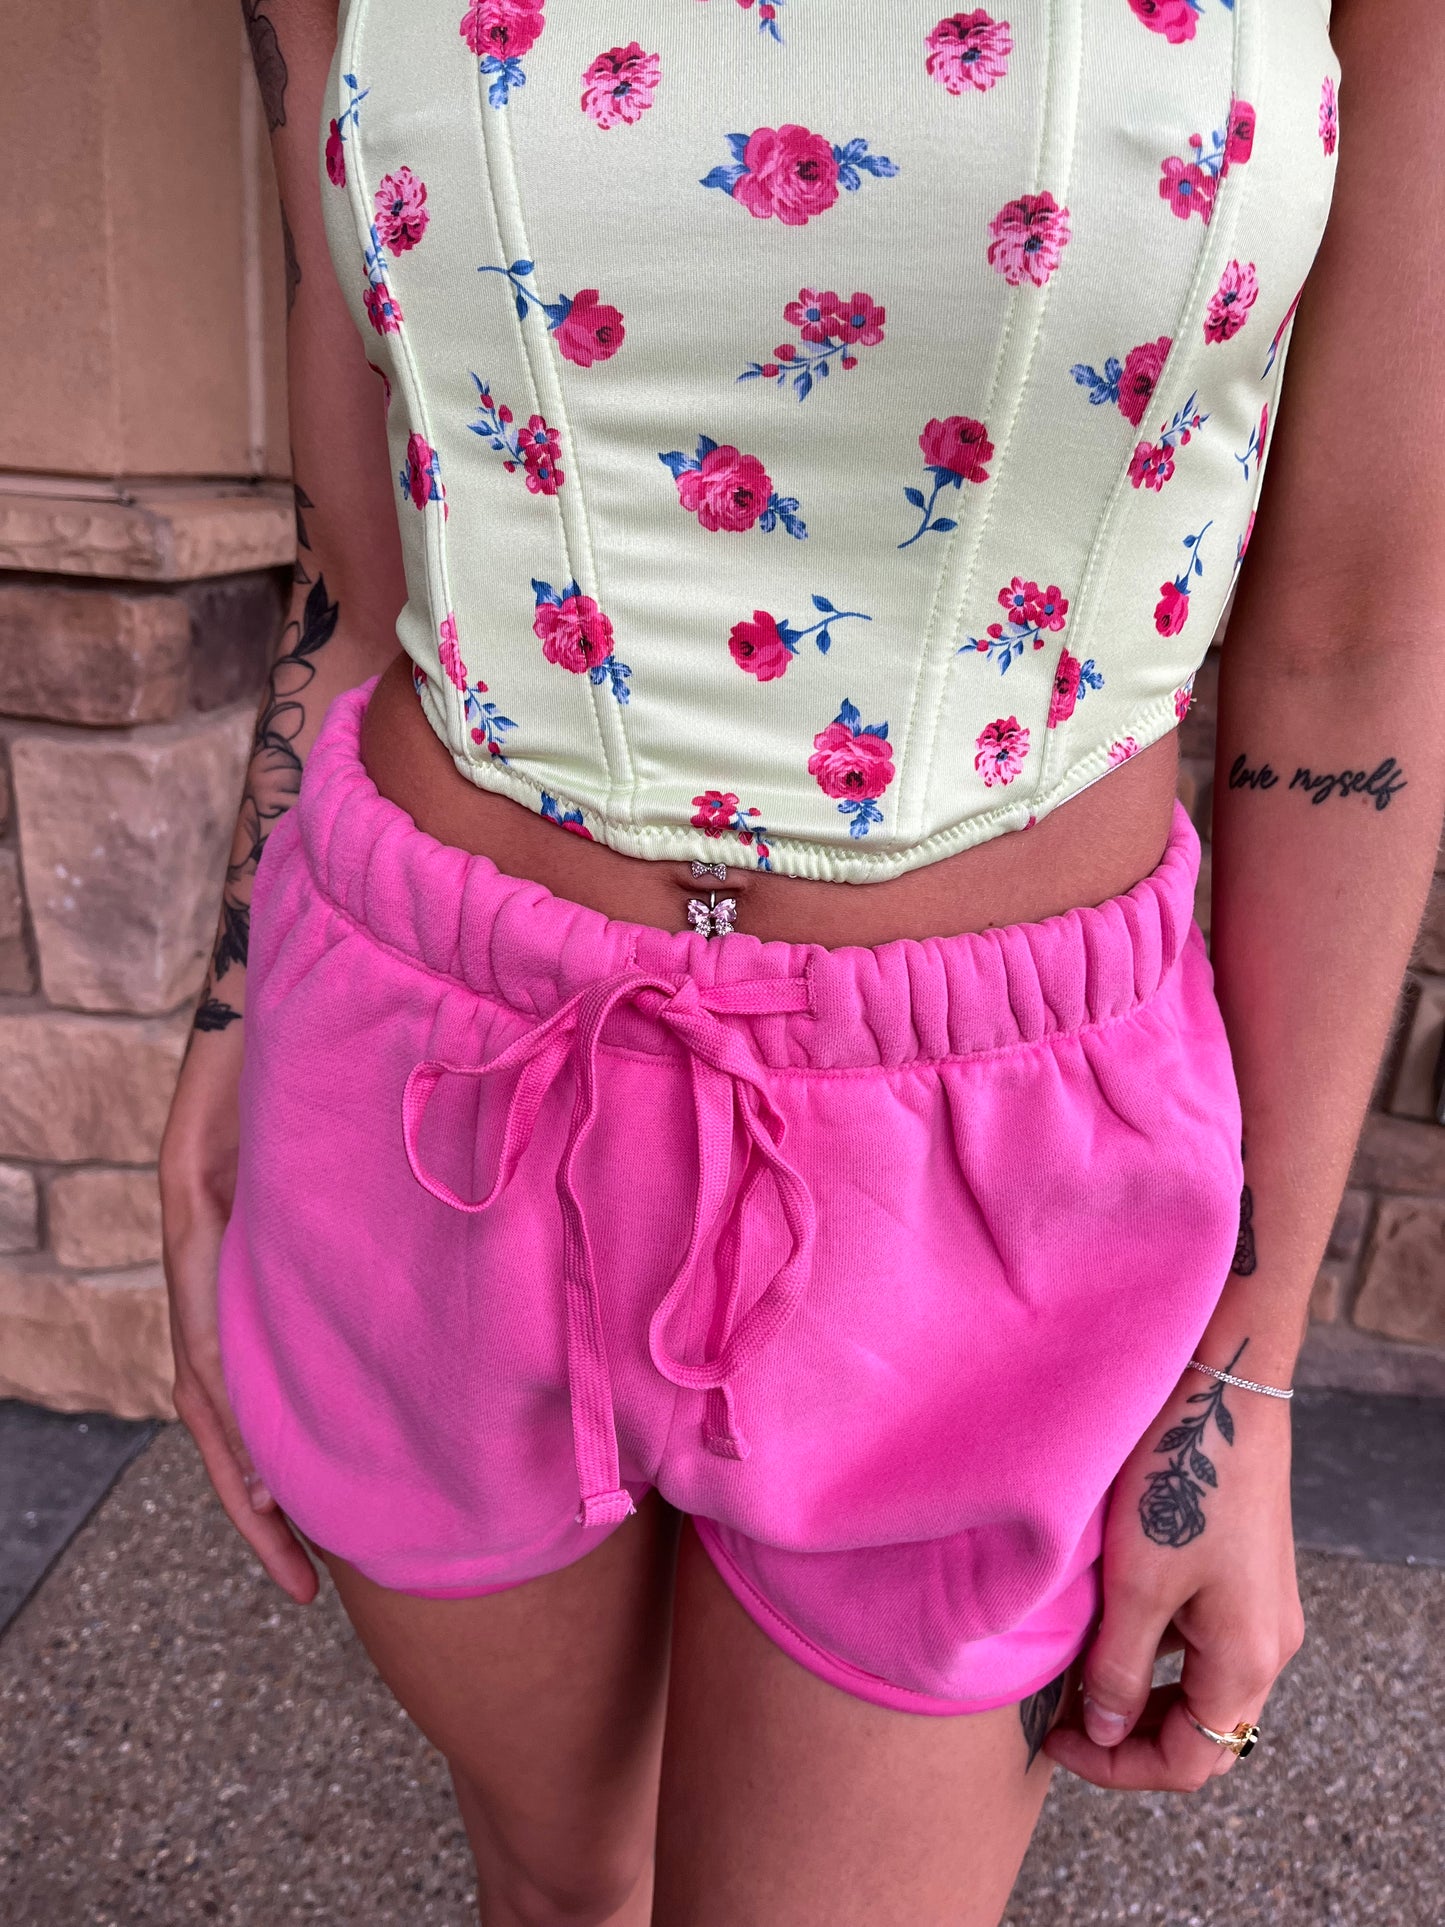 So Fetch Mini Shorts in Hot Pink